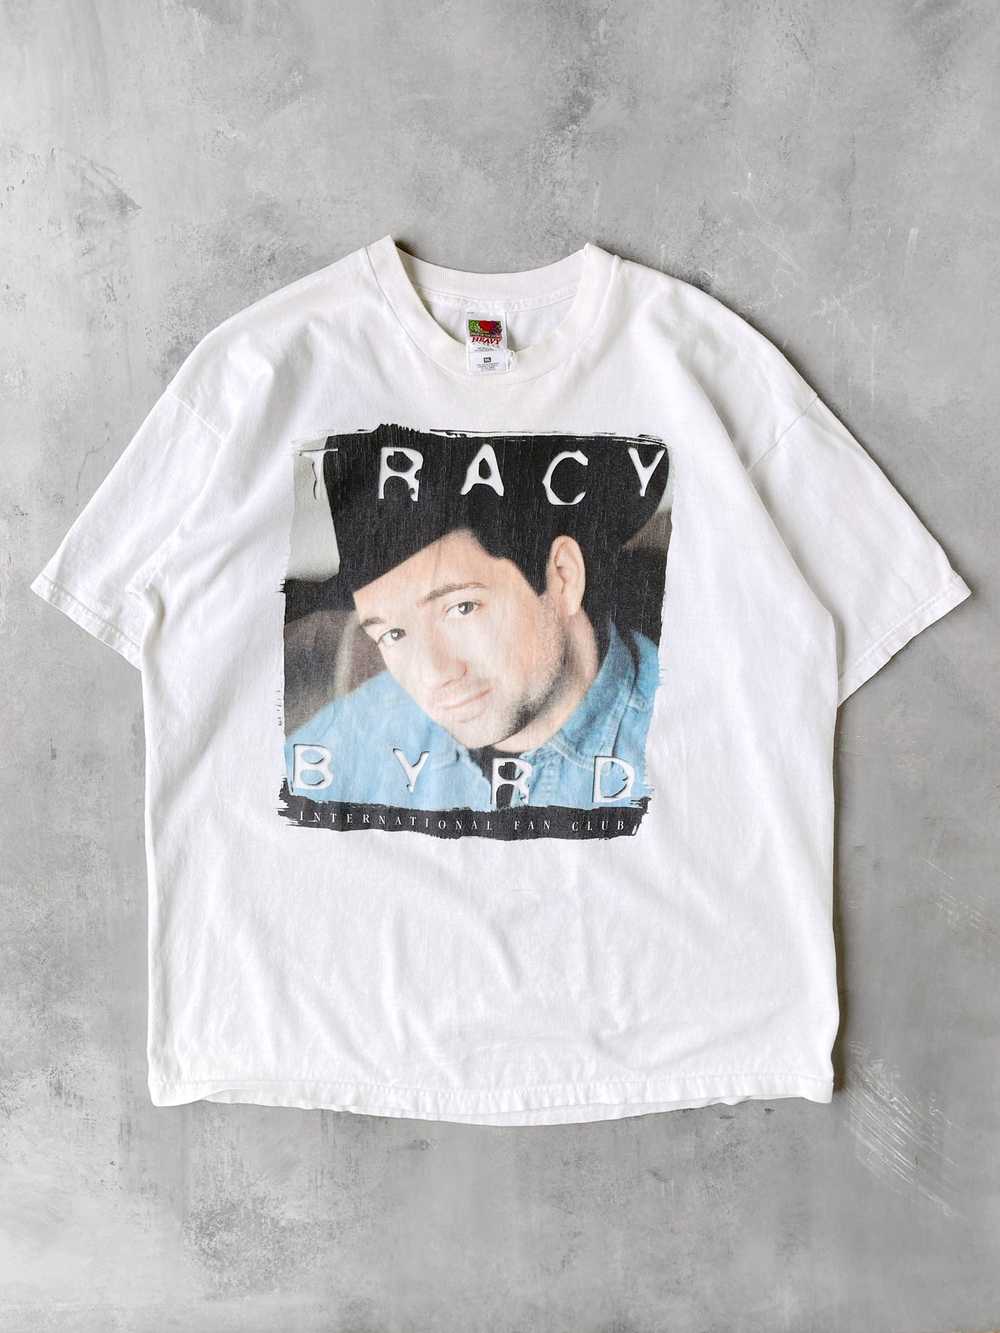 Tracy Byrd T-Shirt 90's - XL - image 1